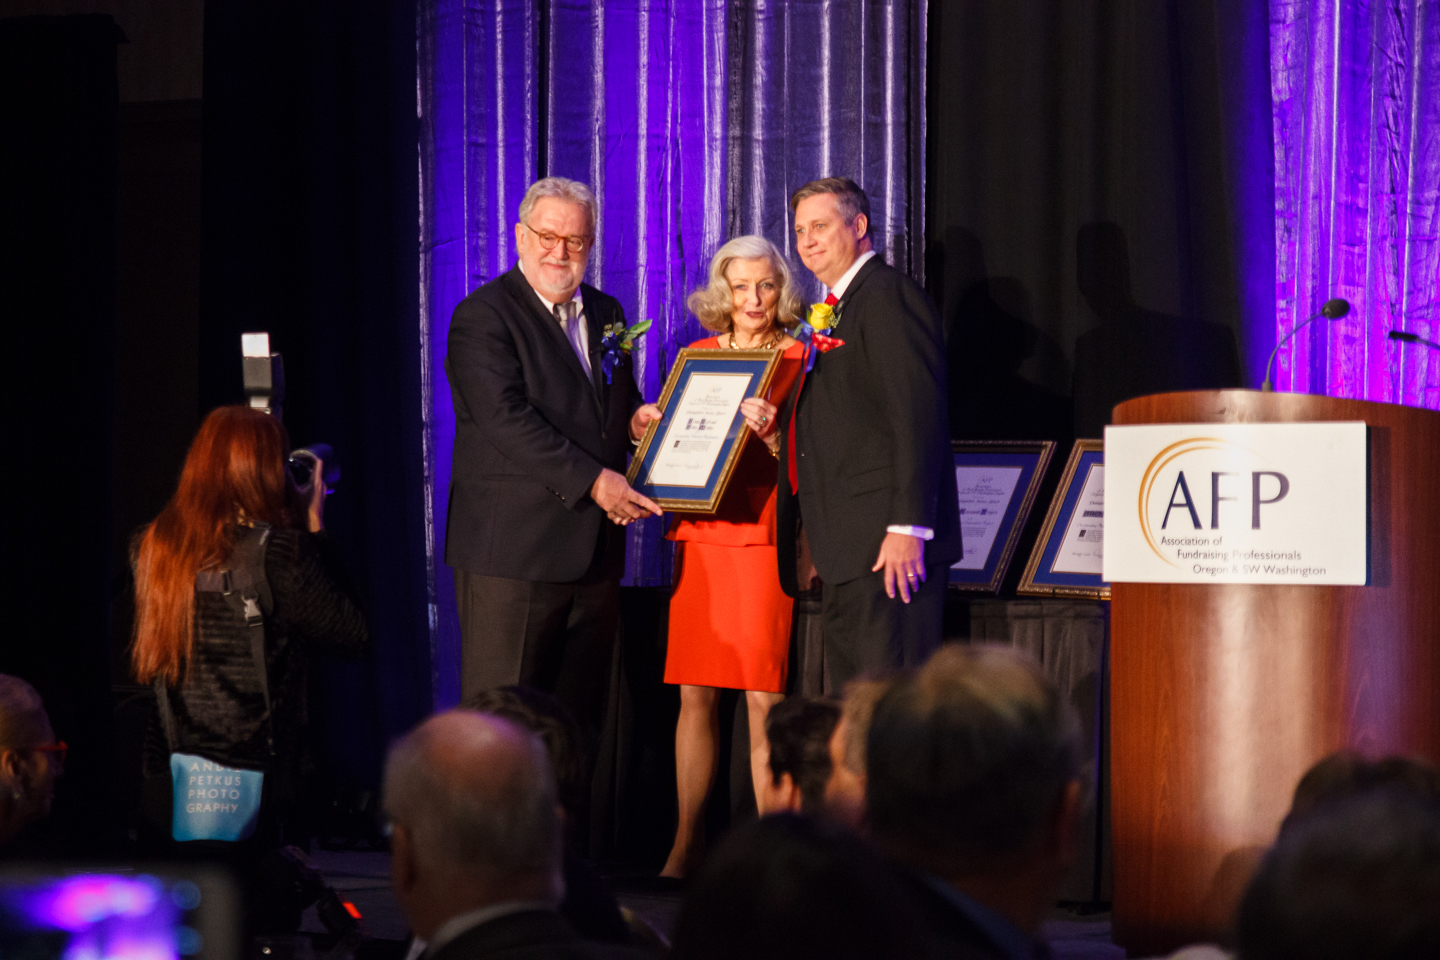 Brian Gard and John Mohlis Honored at AFP Philanthropy Awards Luncheon